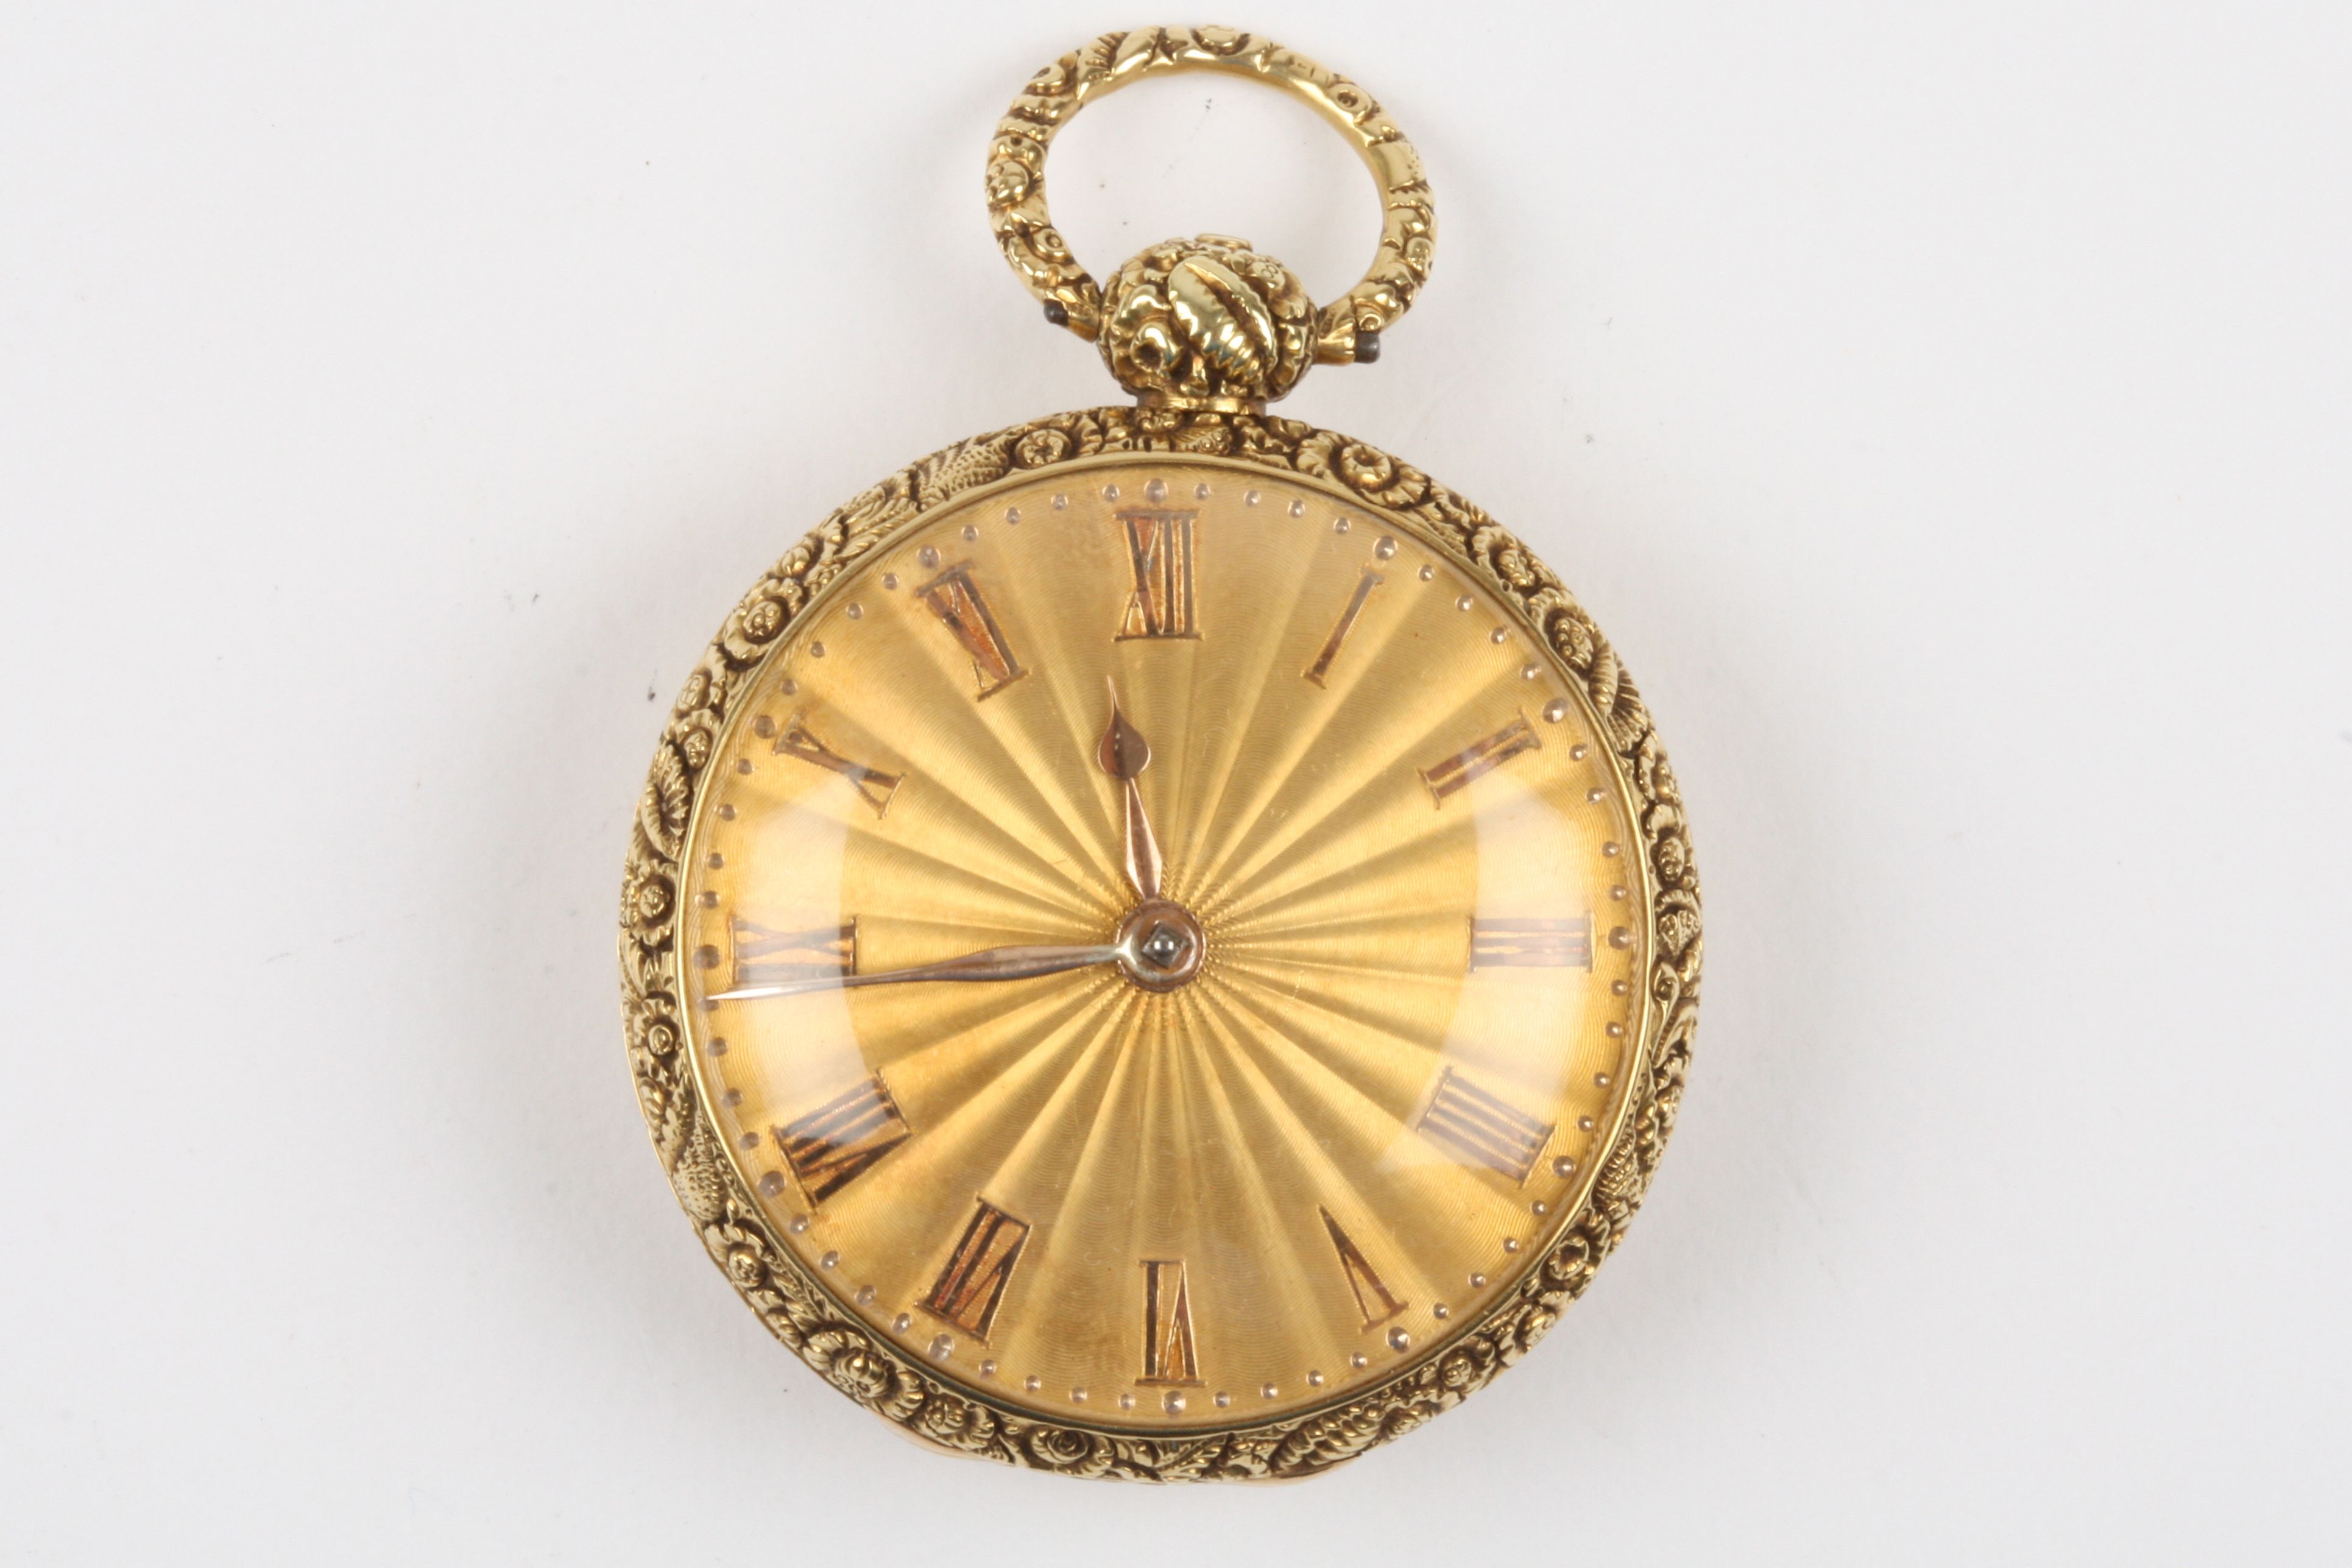 A Regency 18ct gold open face verge pocket watch by Richard Webster
hallmarked London 1820, the gilt